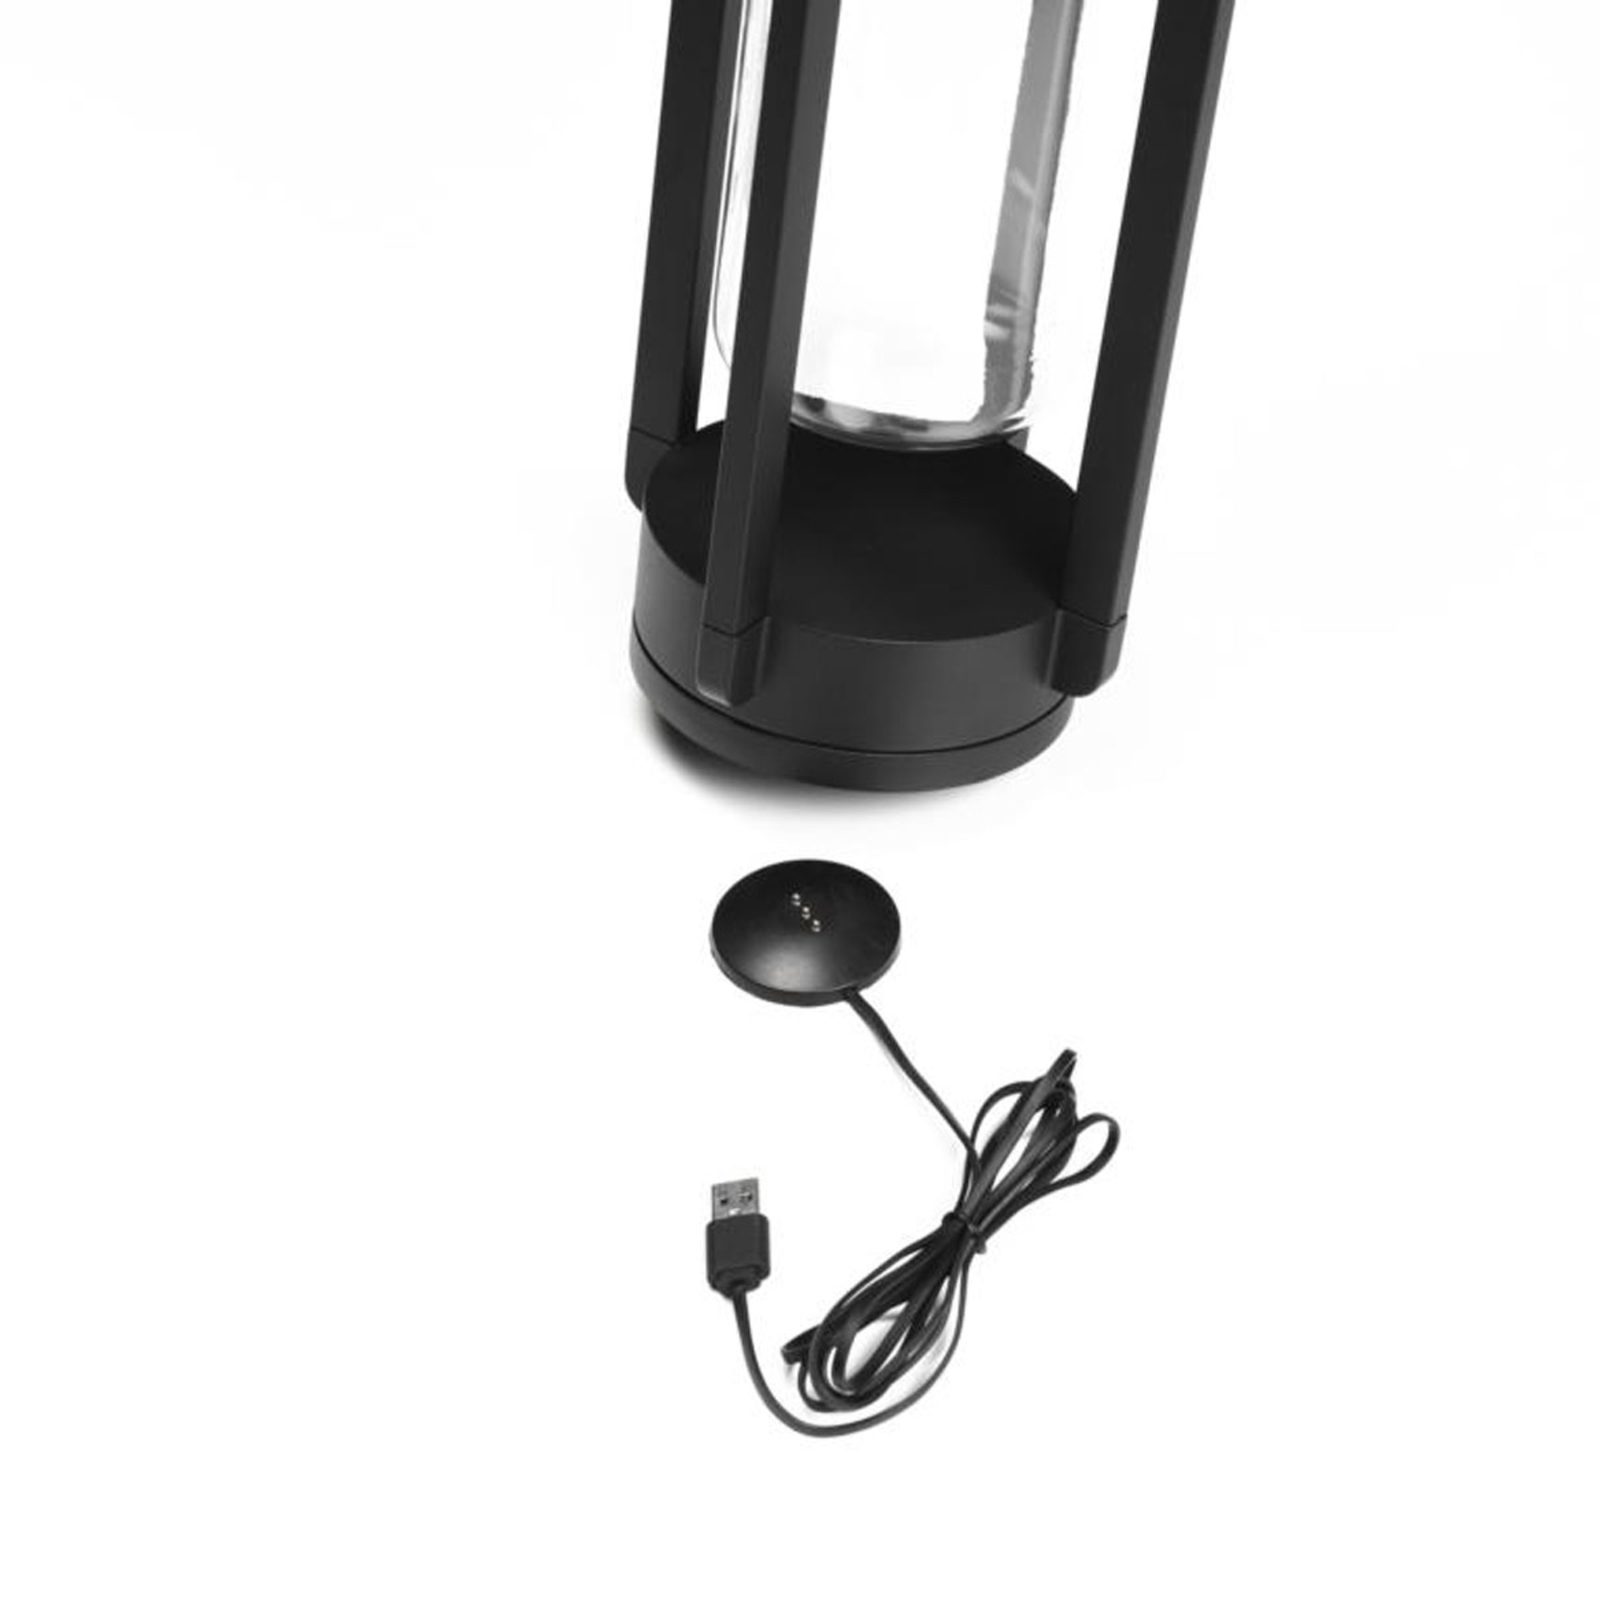 LED Otranto decorative lantern, dimmable, USB